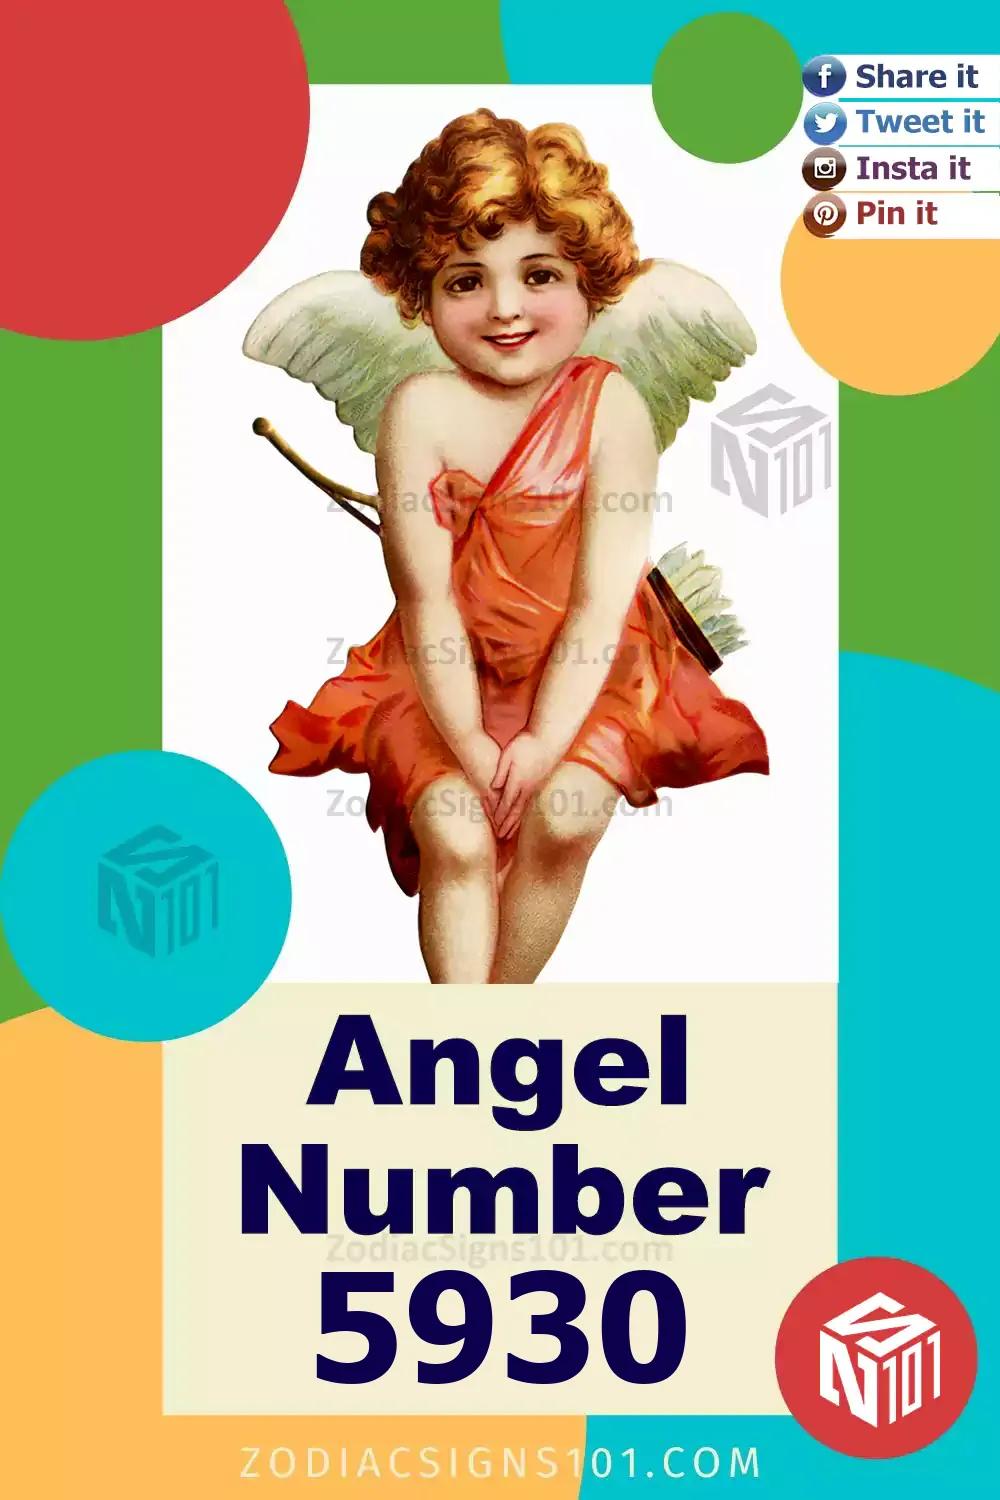 5930-Angel-Number-Meaning.jpg